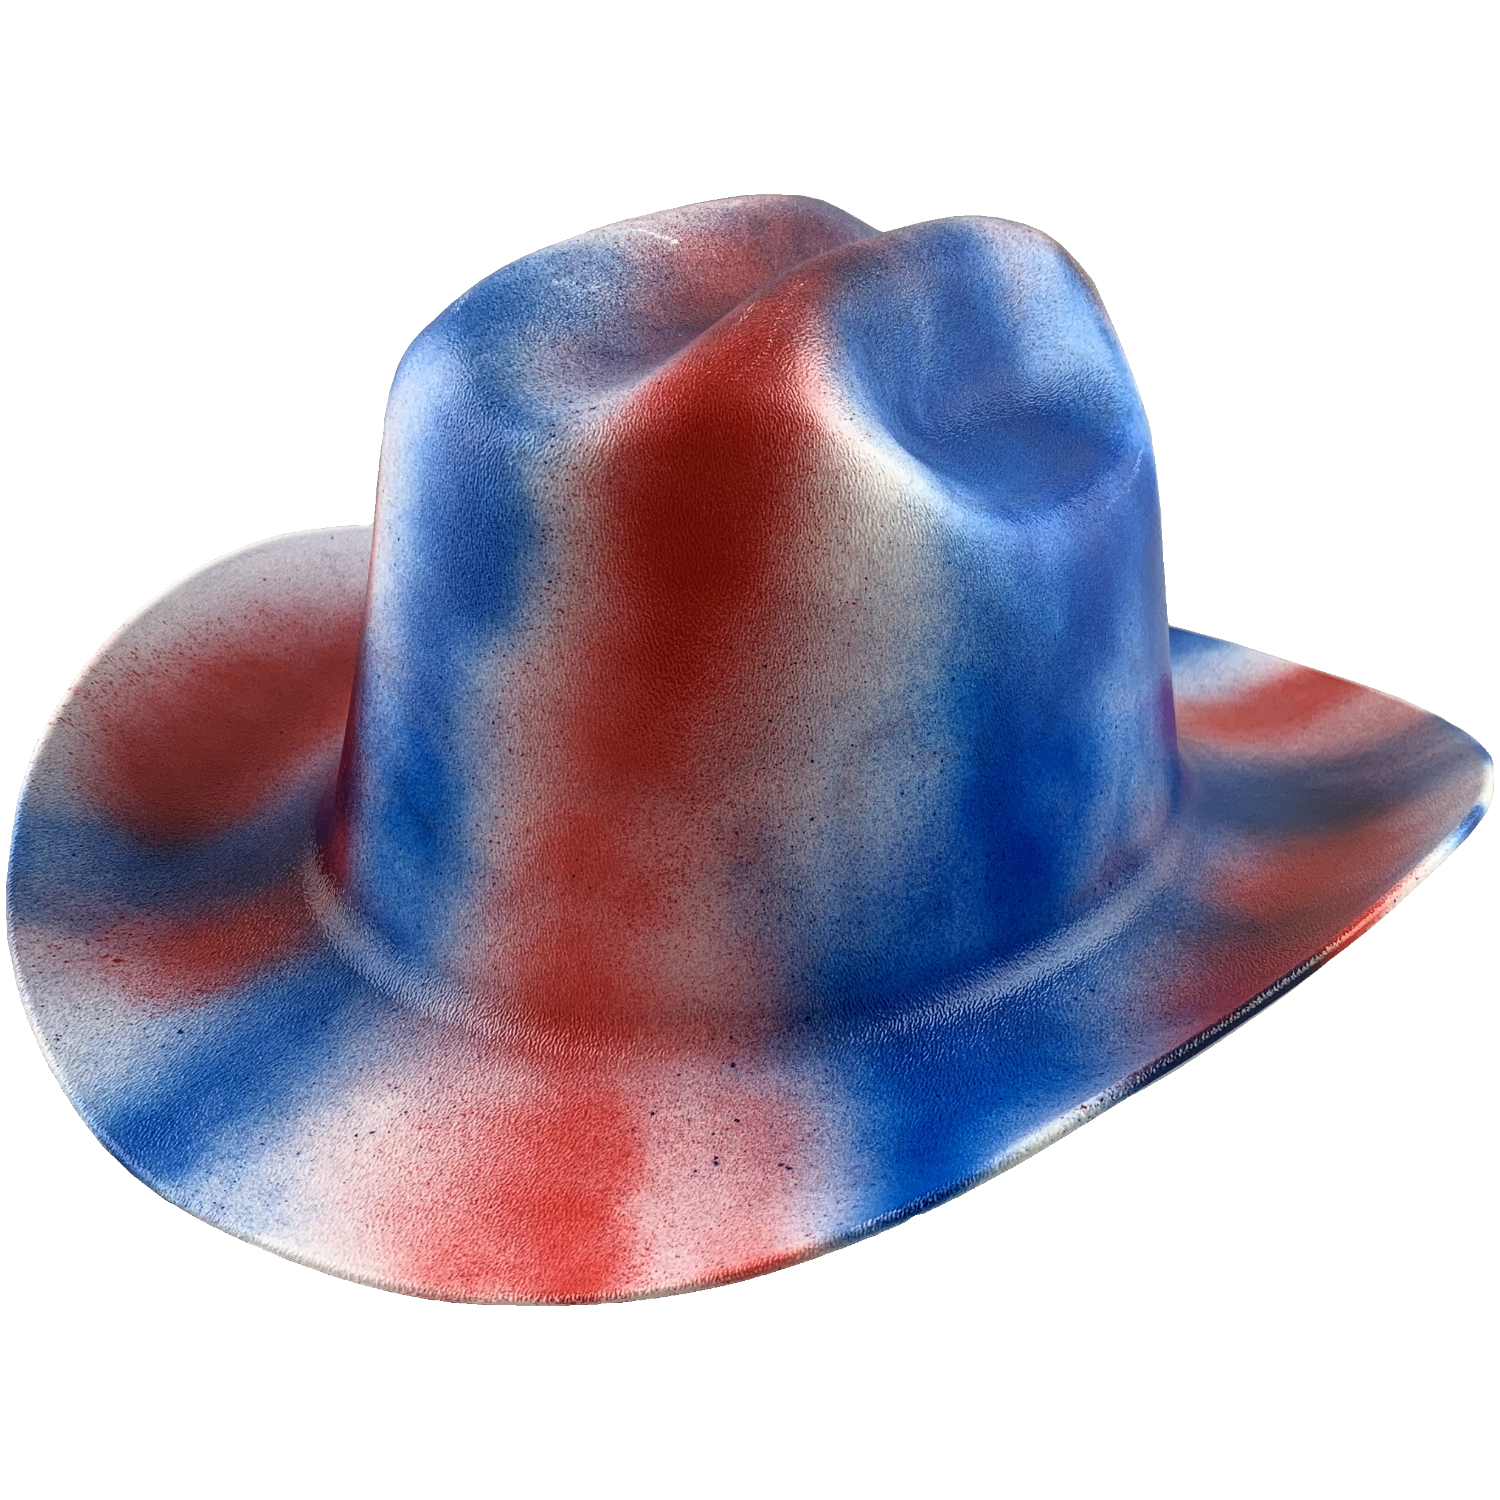 Western Cowboy Hard Hat with Ratchet Suspension